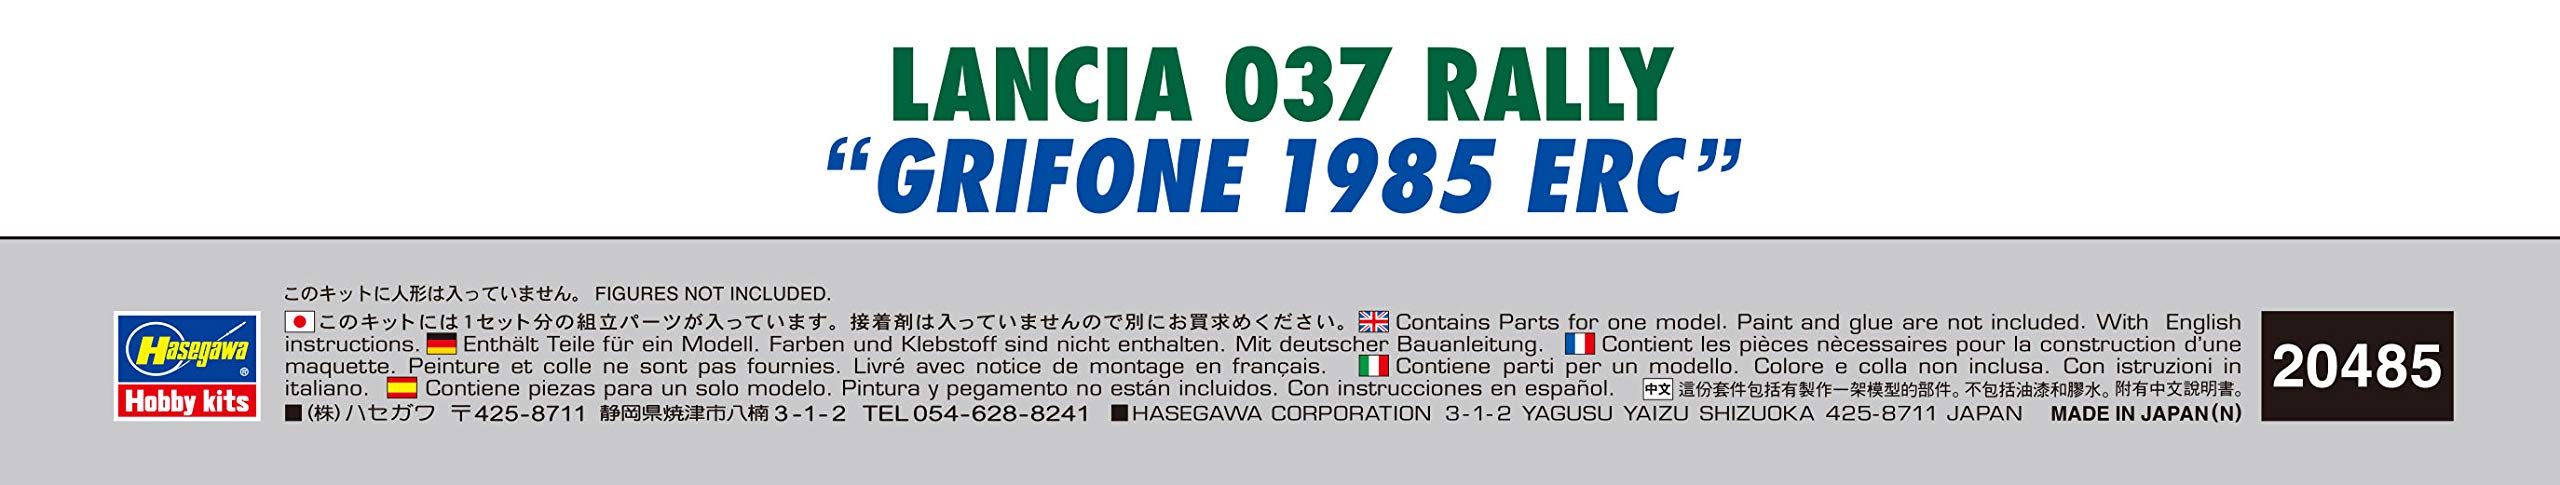 Hasegawa 1/24 Lancia 037 Rally Grifone 1985 ERC Japanische Maßstab Autos PVC Modellbausatz